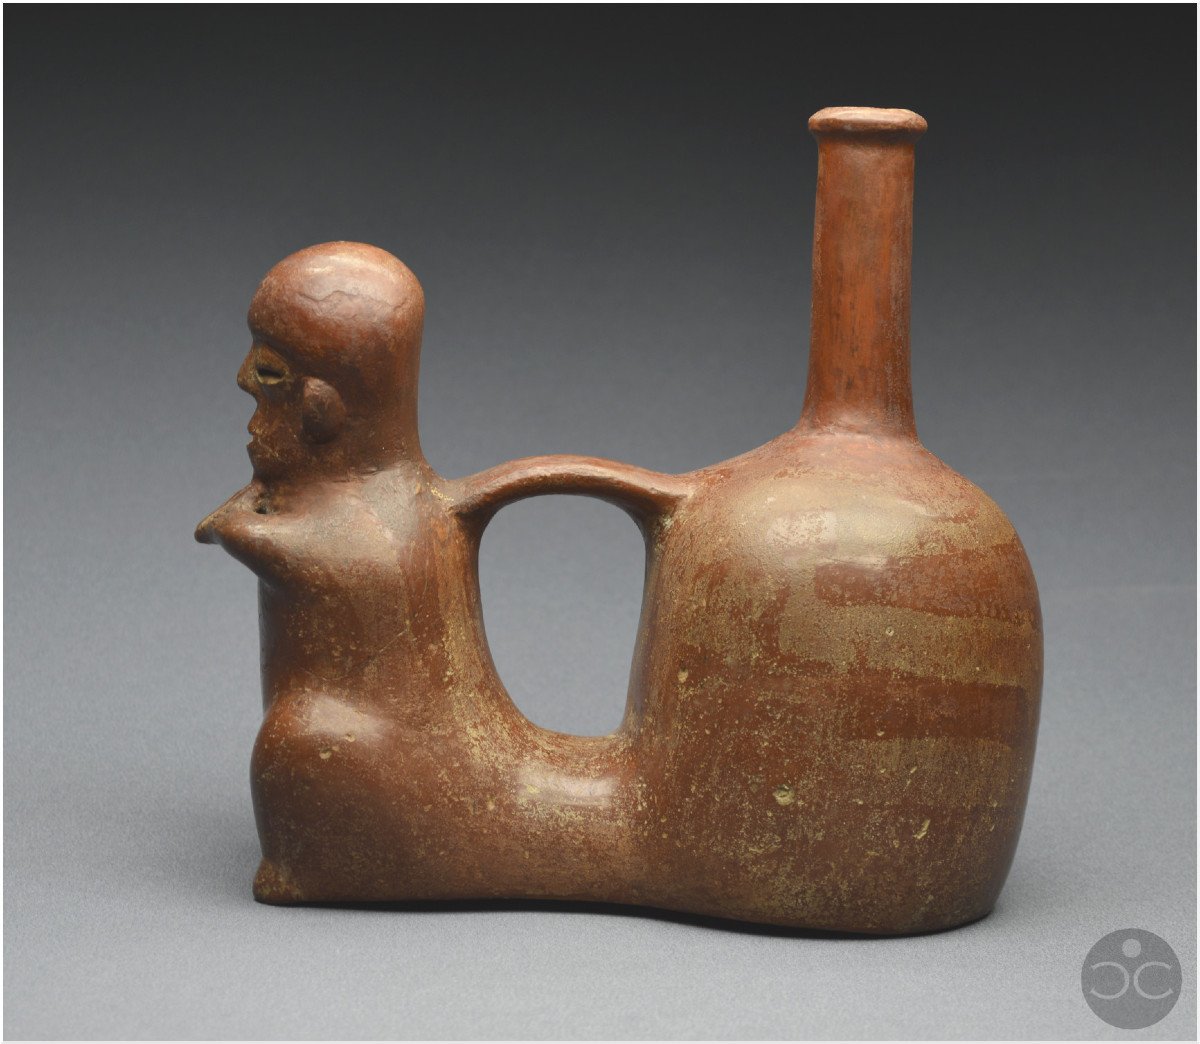 Équateur, 1000 - 500 av J.-C, Culture Chorrera, Vase rituel anthropomorphe, Céramique vernissée-photo-3